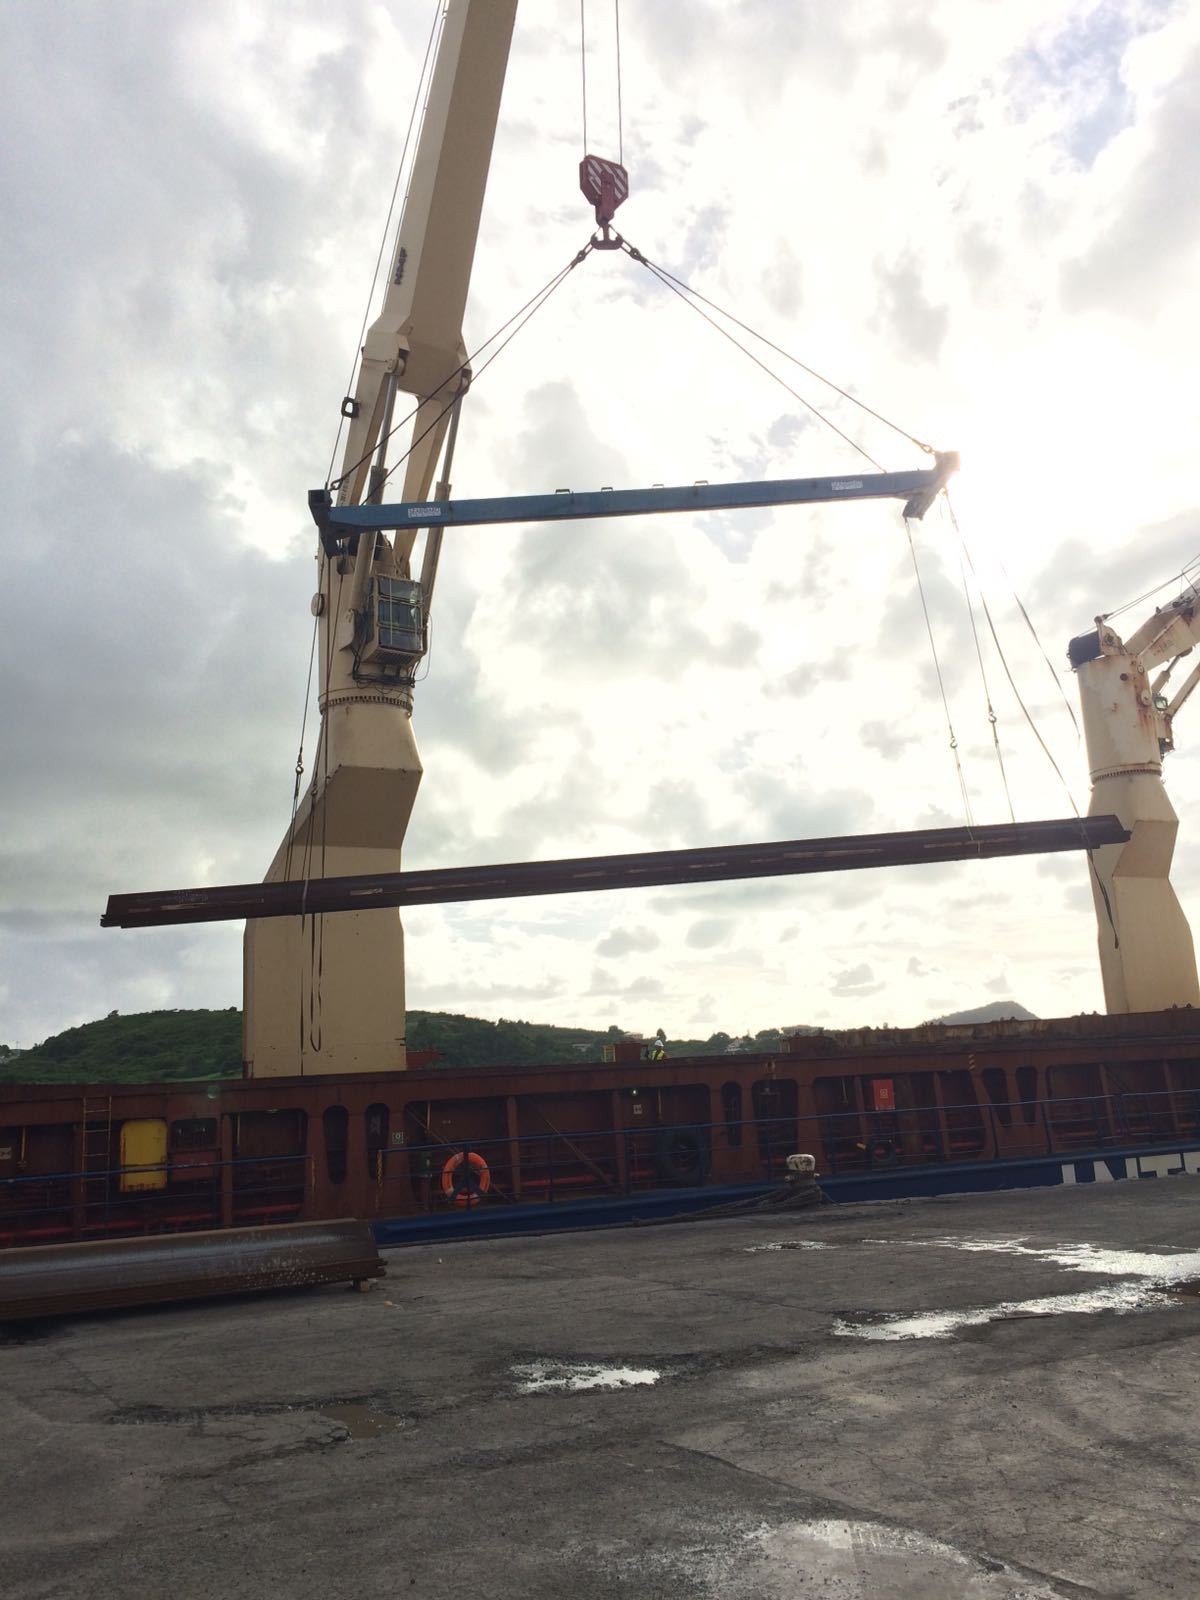 Transporting materials for Antigua Pier